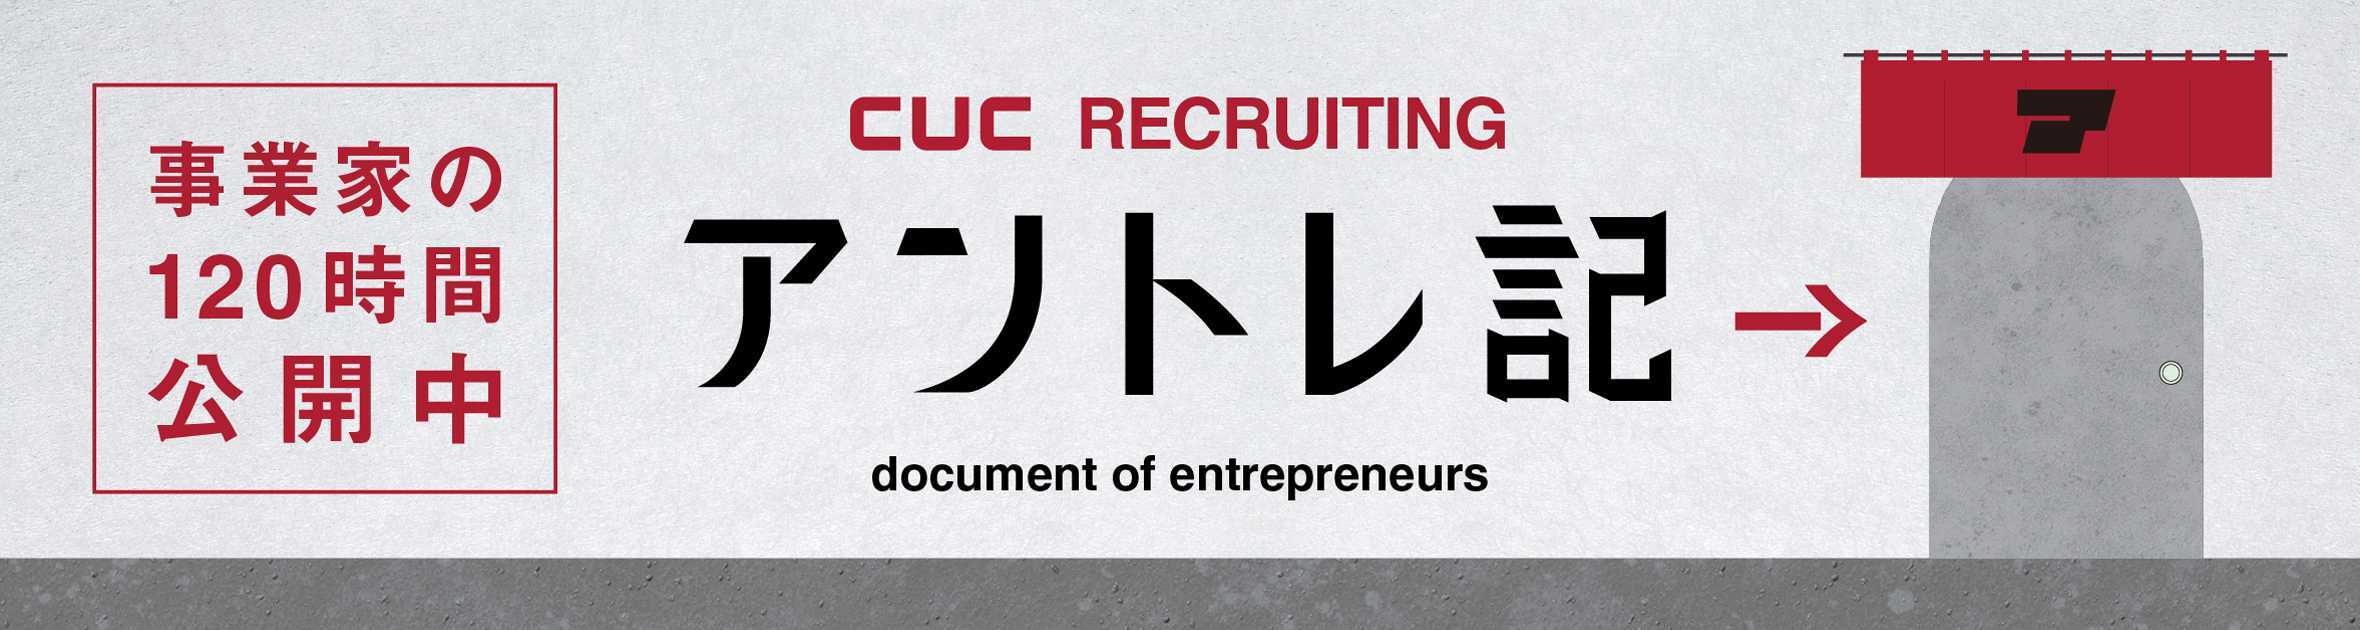 CUC RECRUITING 事業家の120時間公開中 アントレ記 document of entrepreneurs